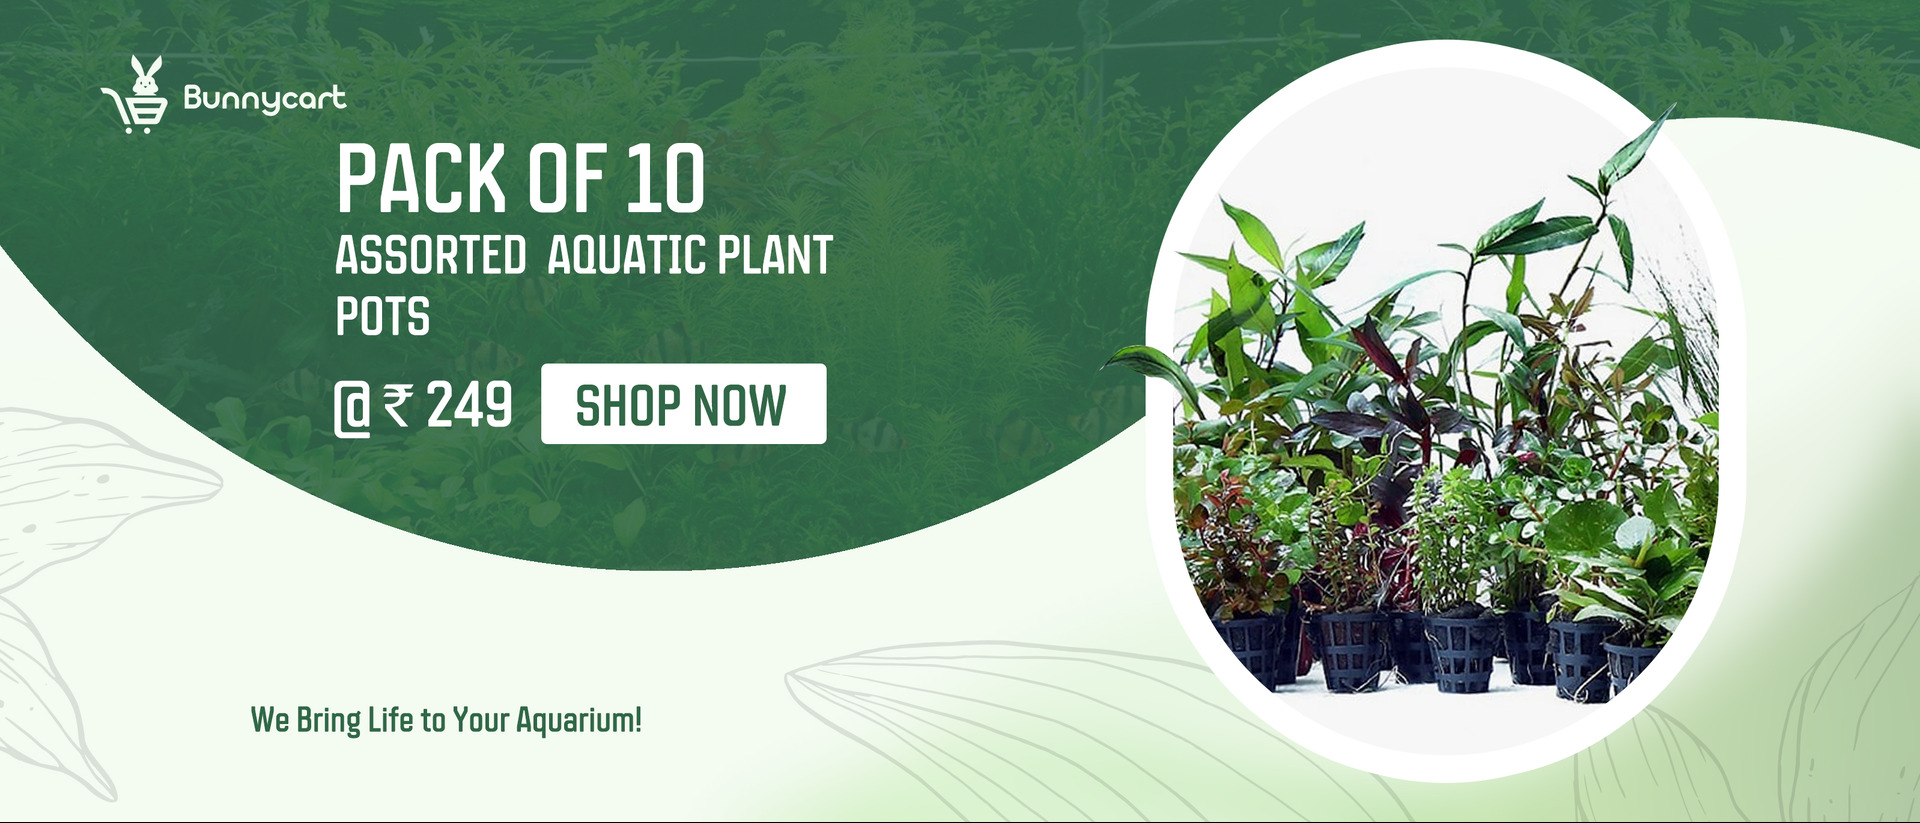 Pack_of_10_Assorted_Aquatic_Plants